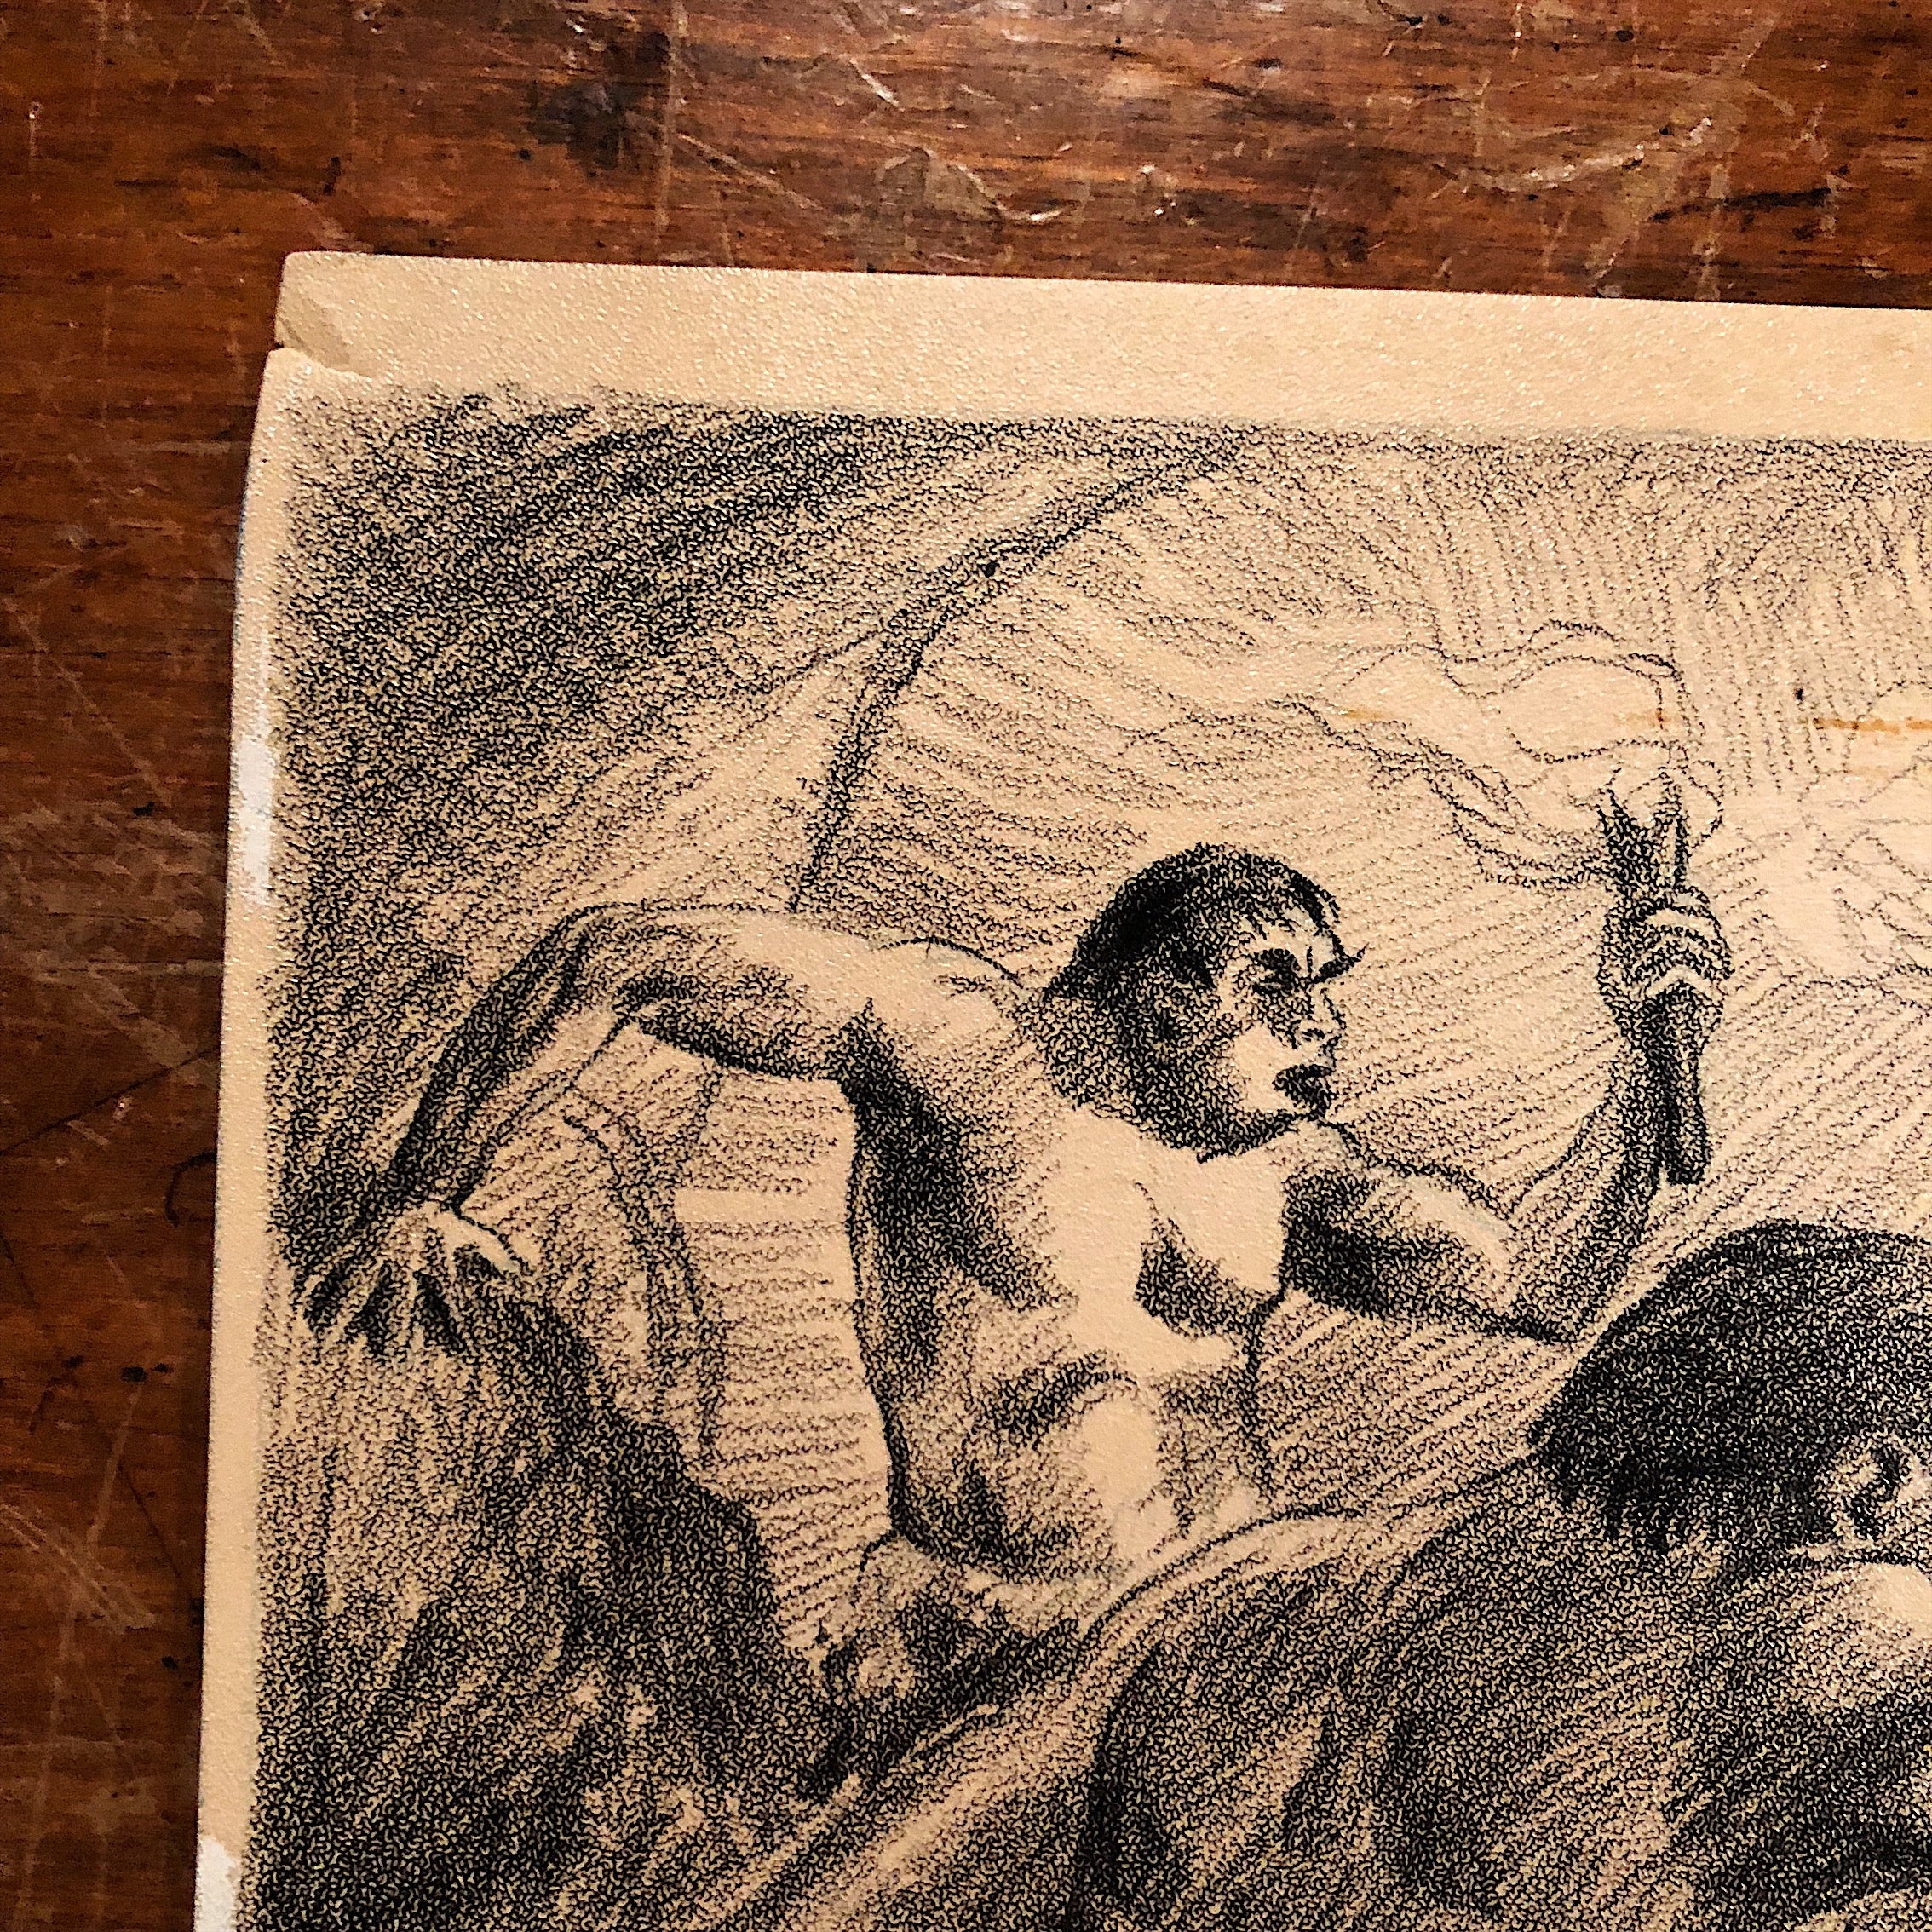 Vintage Illustration Art of Killer Bear and Cavemen from 1950s